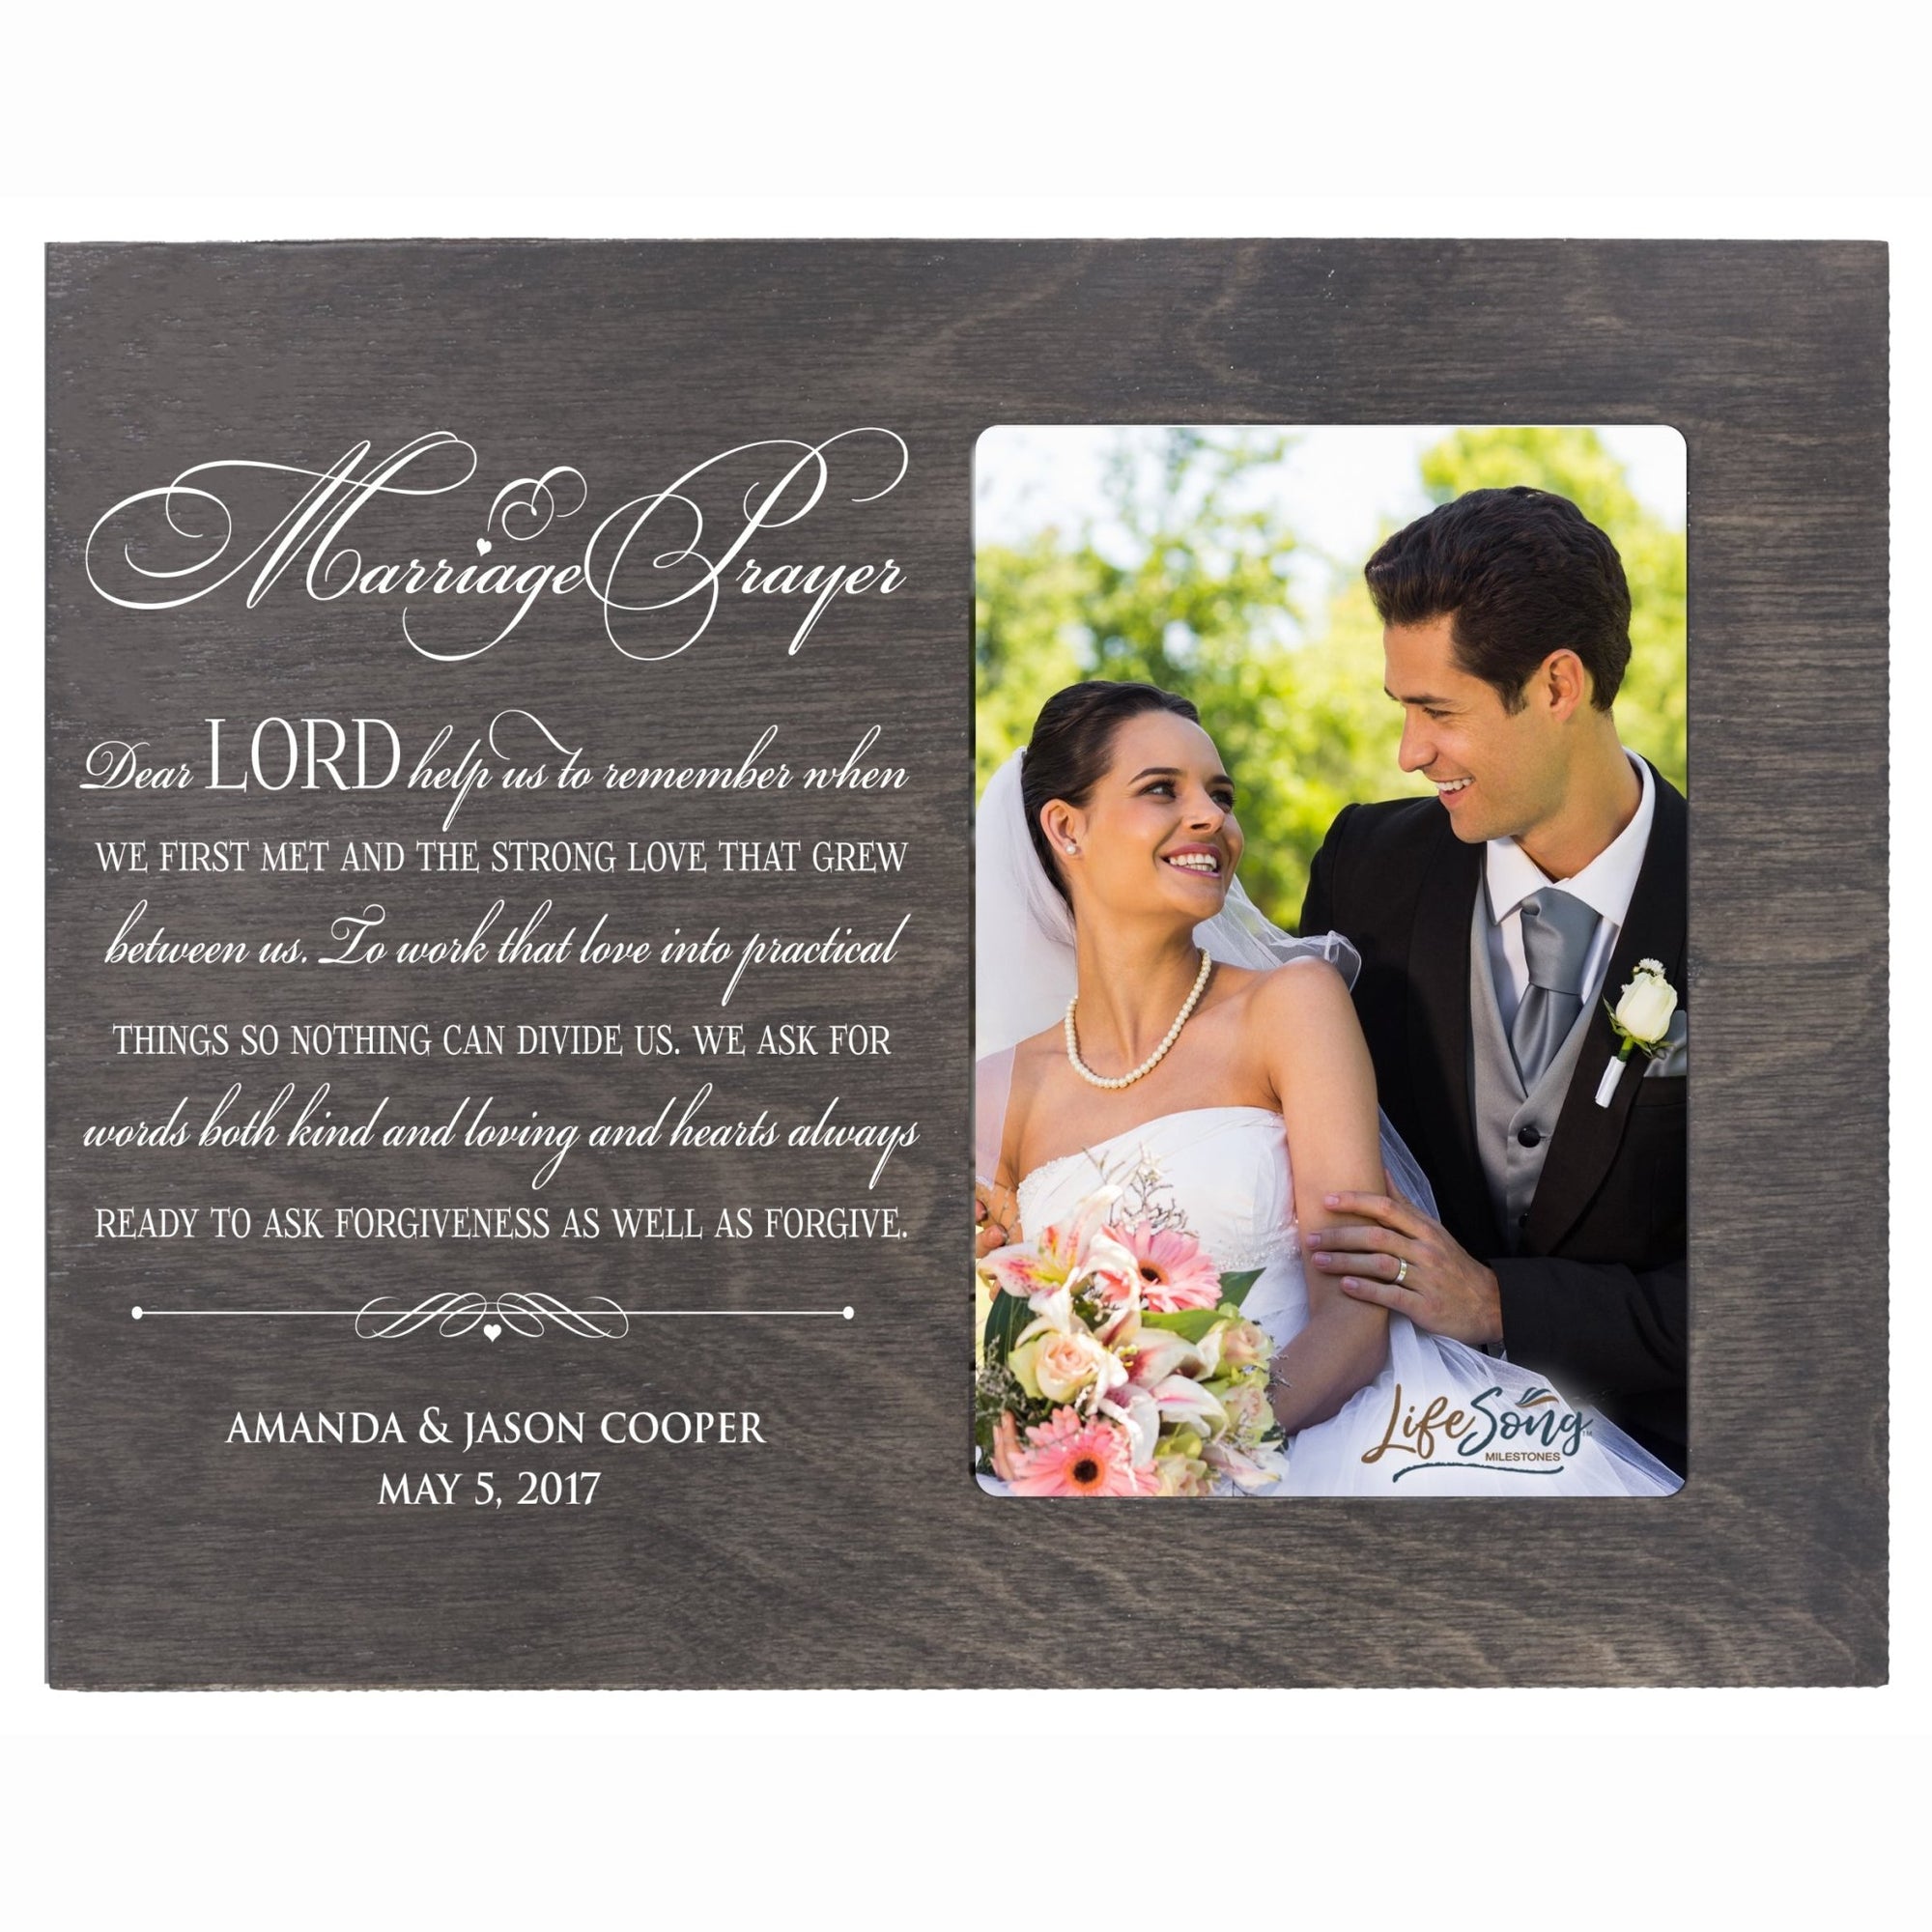 Personalized Wedding Keepsake Picture Frames - Marriage Prayer - LifeSong Milestones